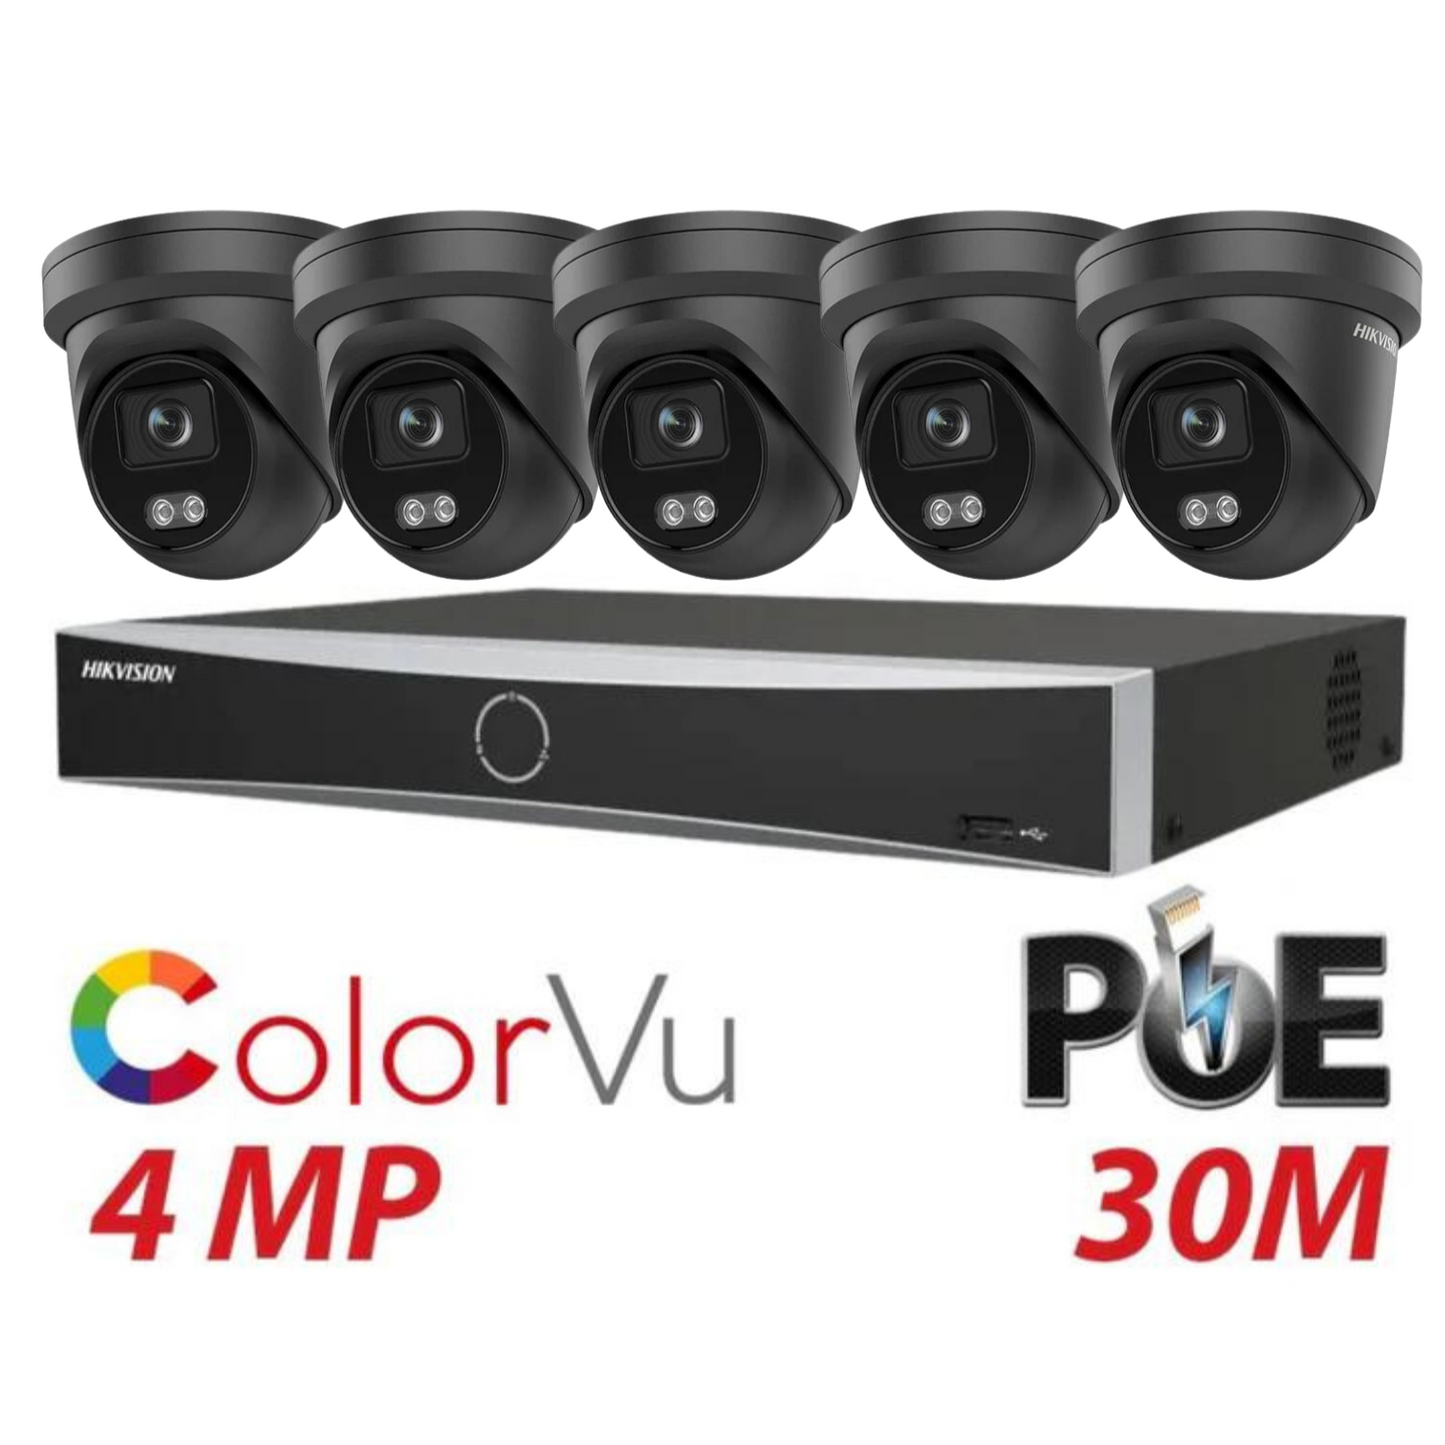 Hikvision CCTV kit, 5 x 4mp Smart Hybrid Colorvu IP Poe cameras with Audio, 1 x 8 Channel NVR